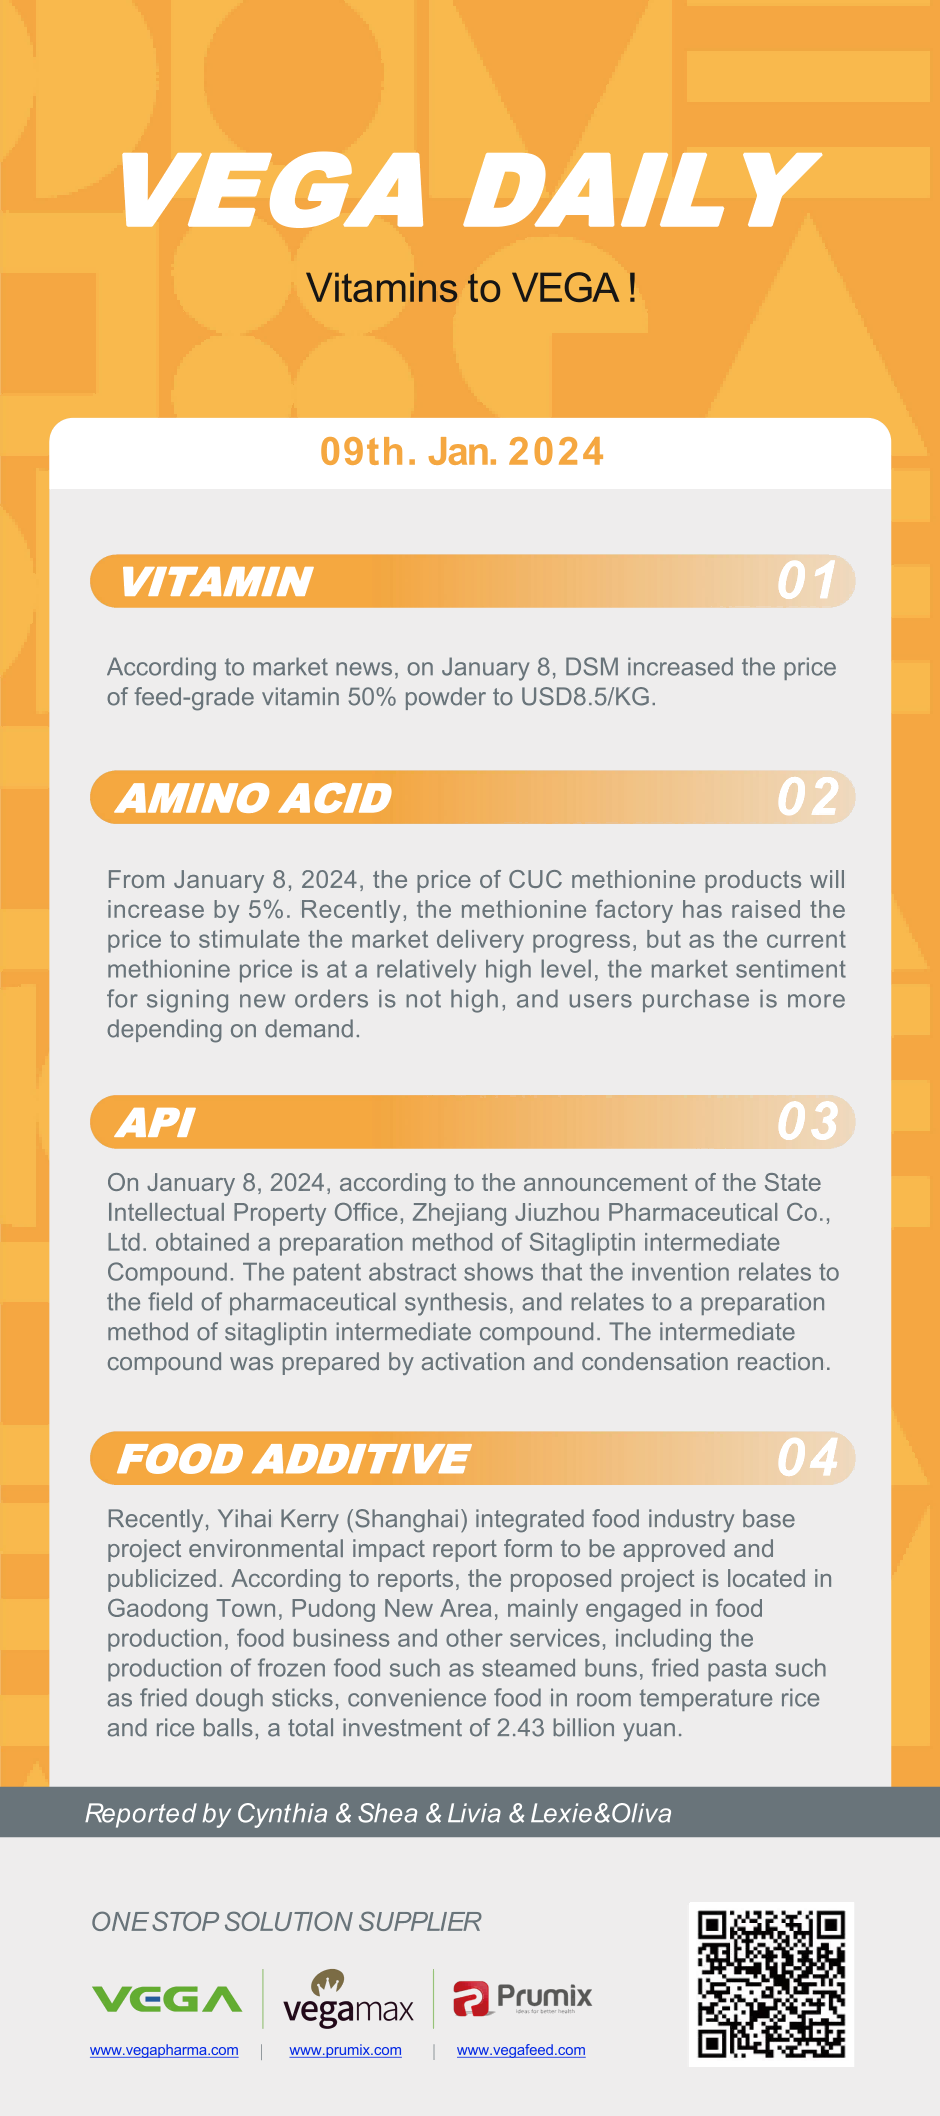 Vega Daily Dated on Jan 9th 2024 Vitamin Amino Acid APl Food Additives.png